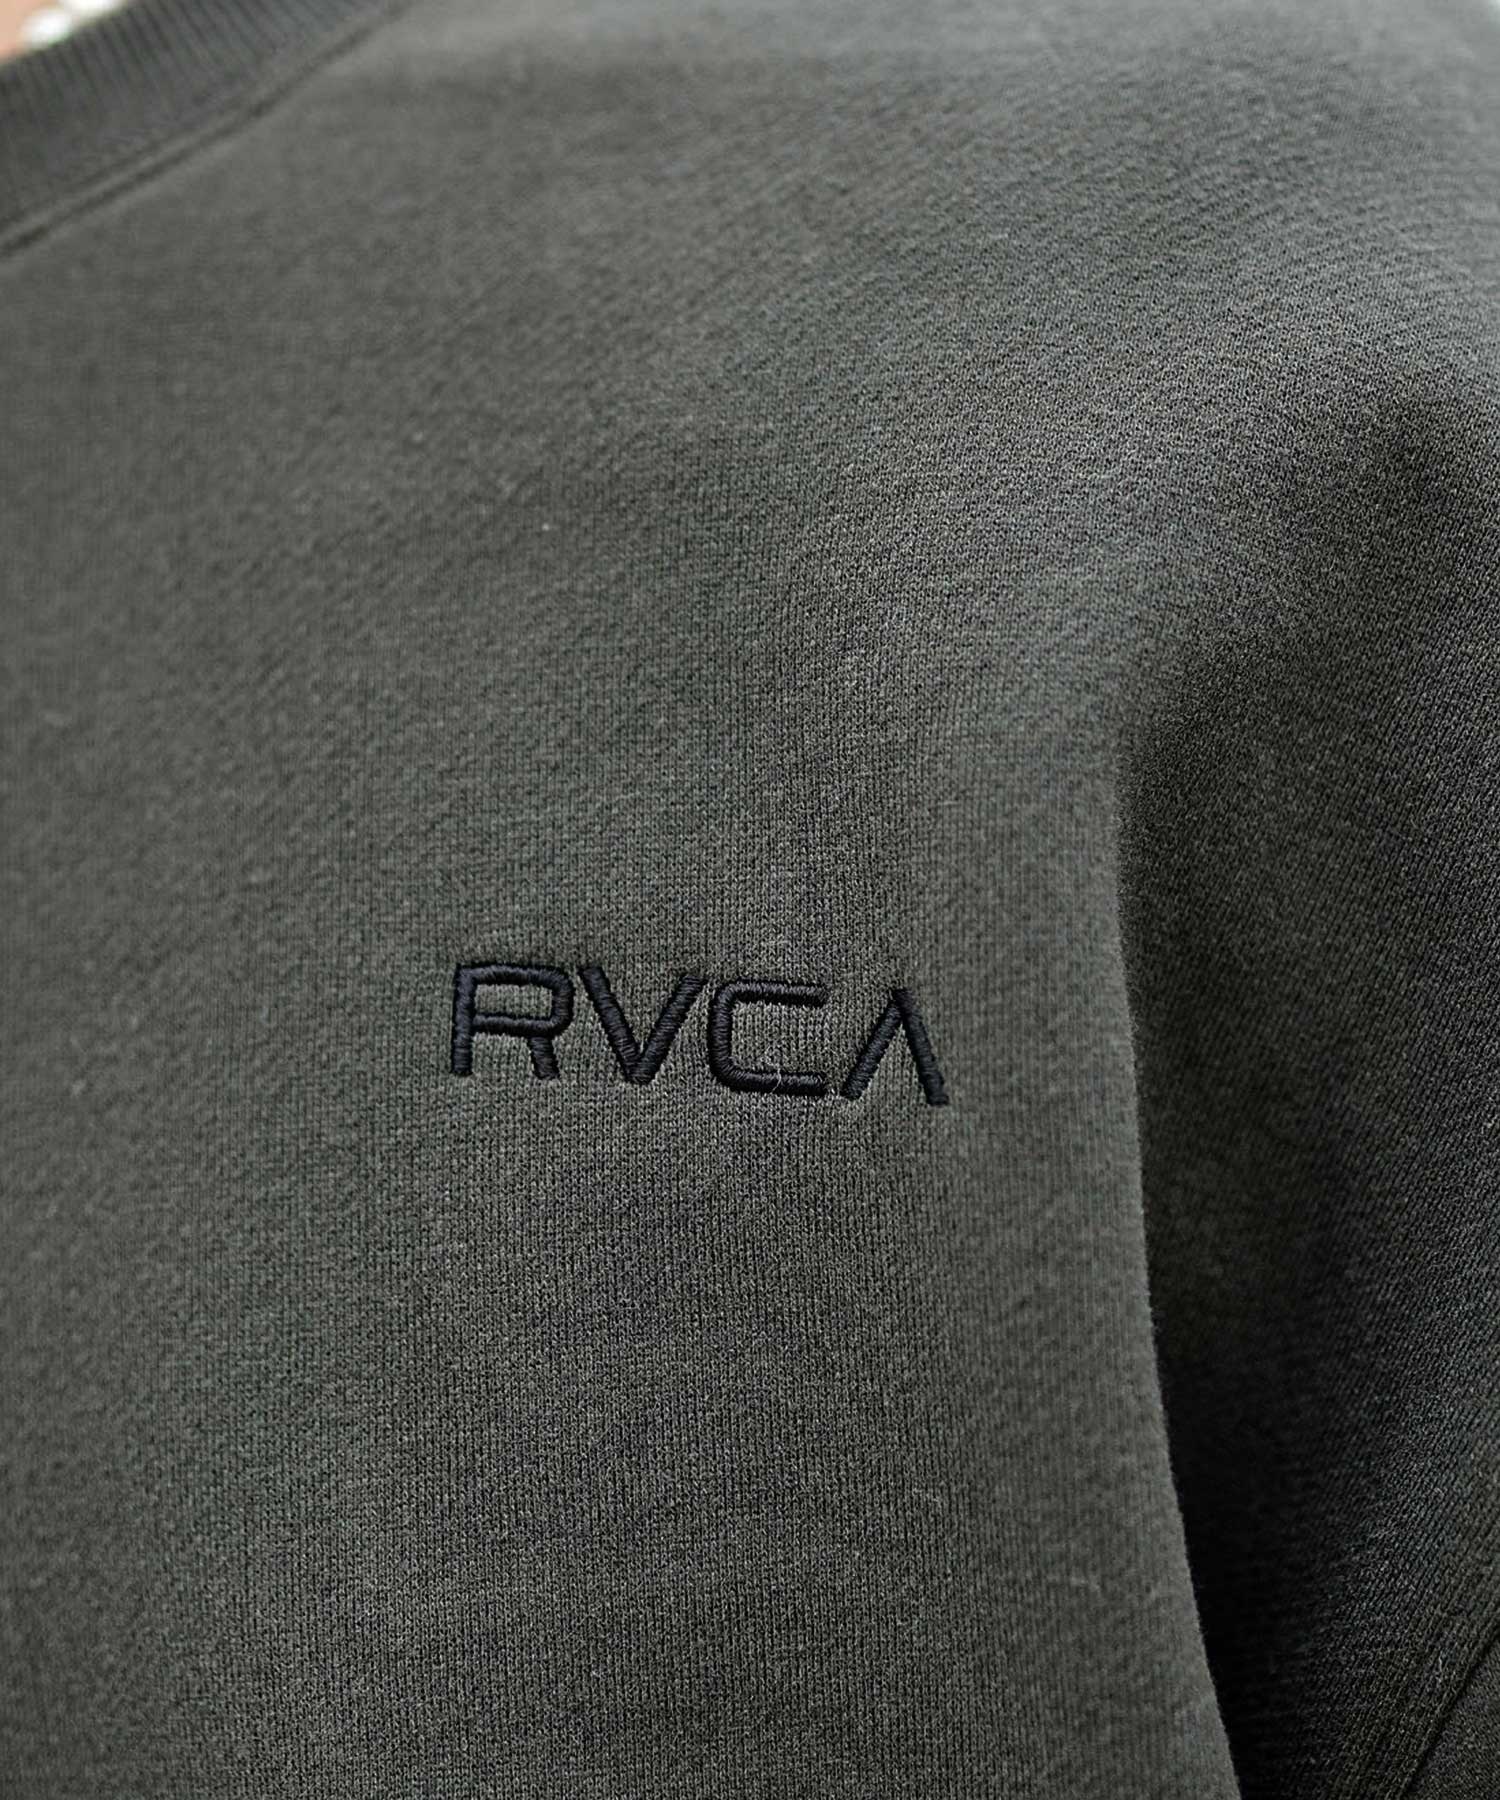 RVCA/ルーカ FAKE RVCA CR メンズ トレーナー クルーネック スウェット バックプリント 裏起毛 BD042-150(BLK-S)